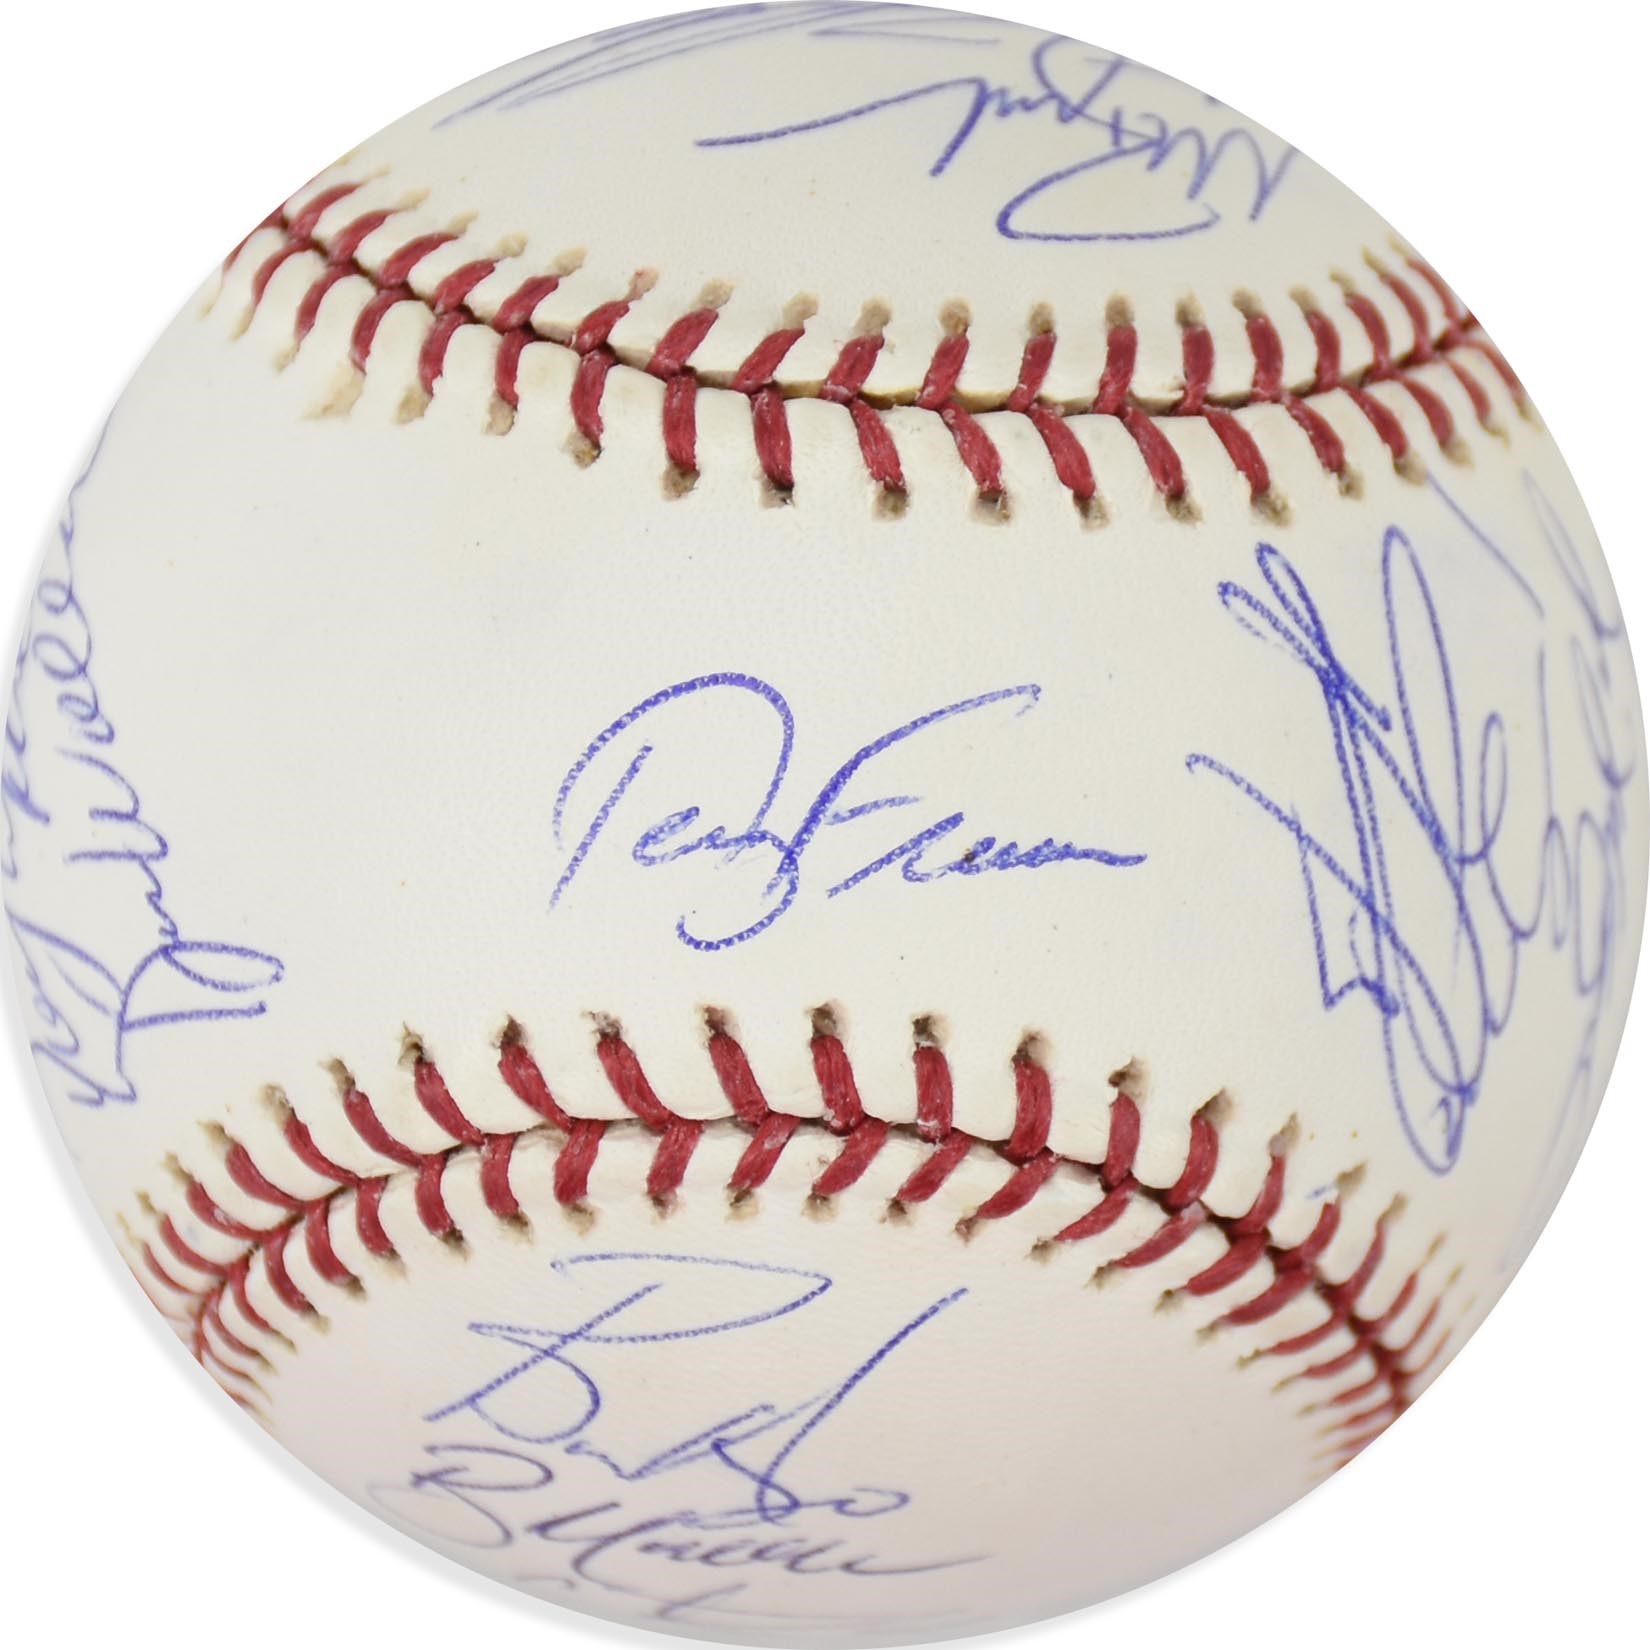 Boston Sports - 2004 World Champion Boston Red Sox Team-Signed Baseball (PSA)